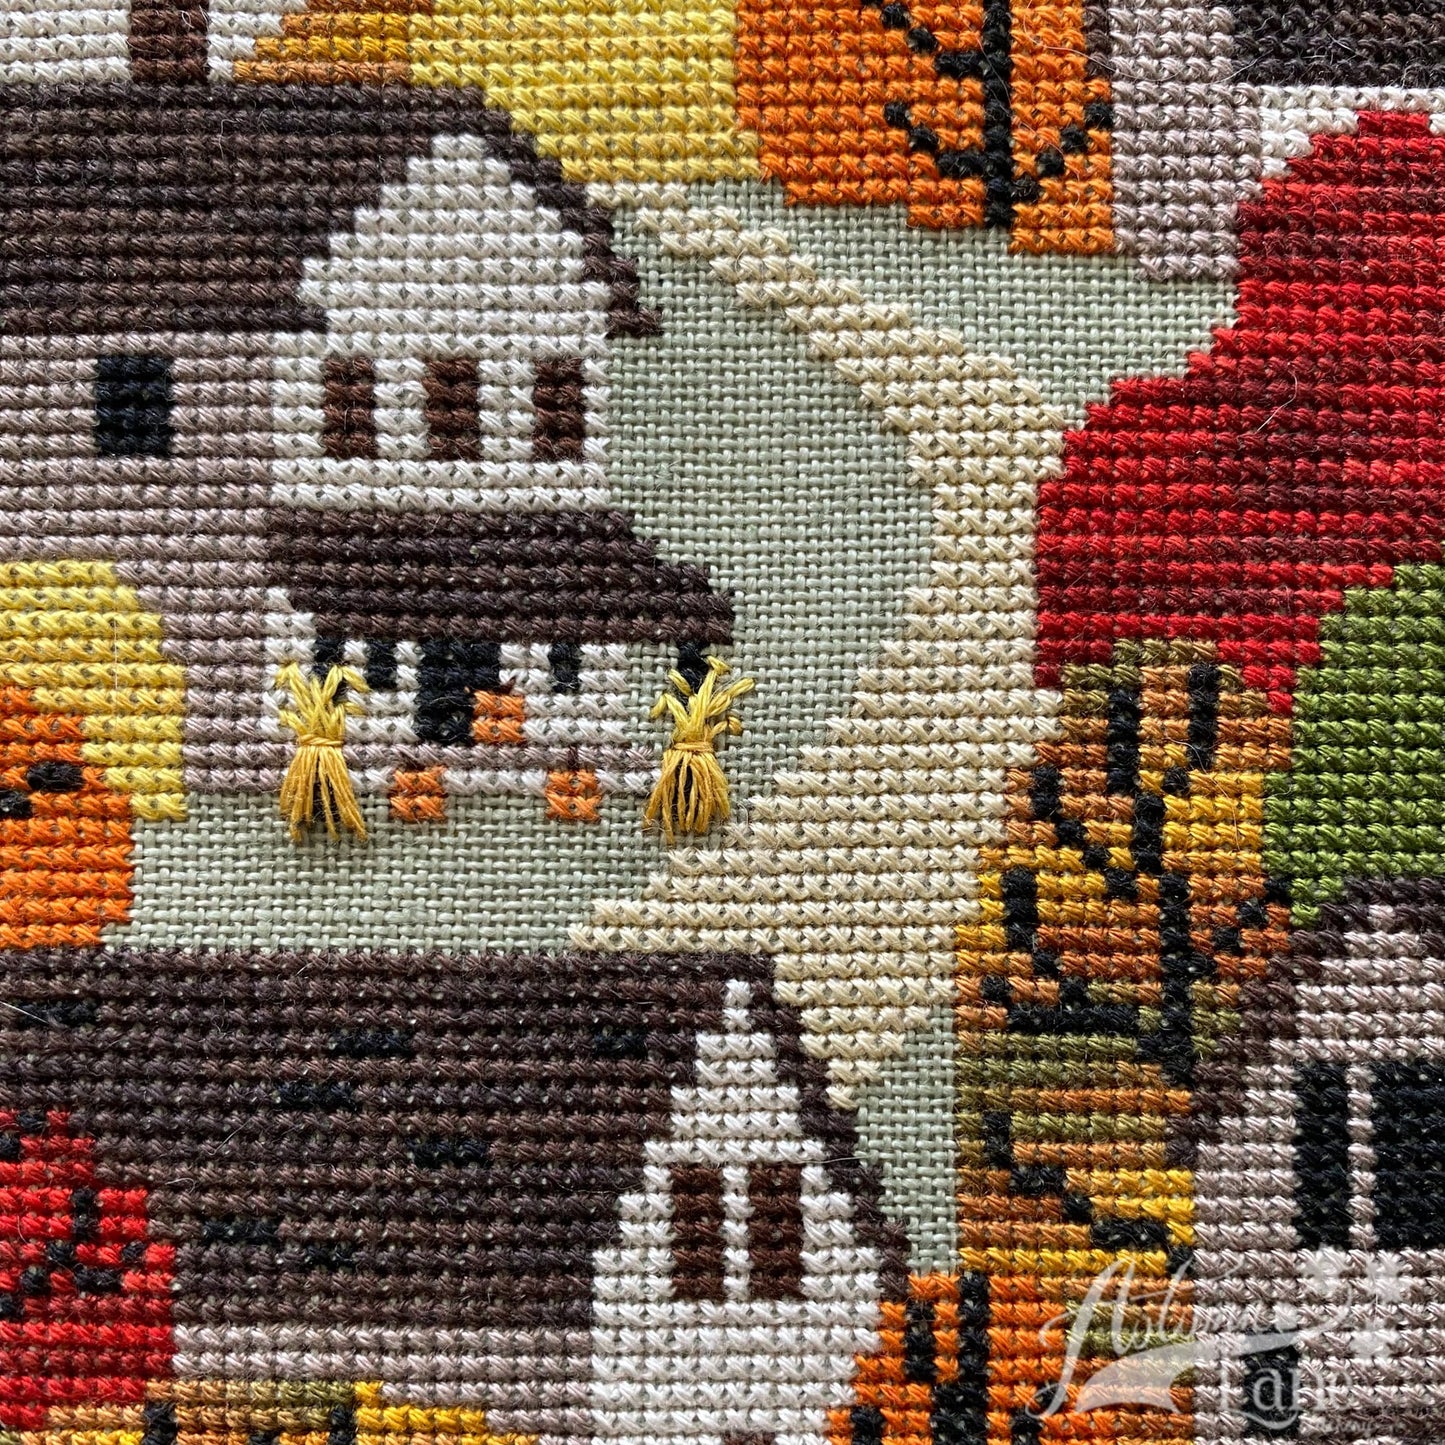 Autumn Towne Cross Stitch Pattern - Digital Download